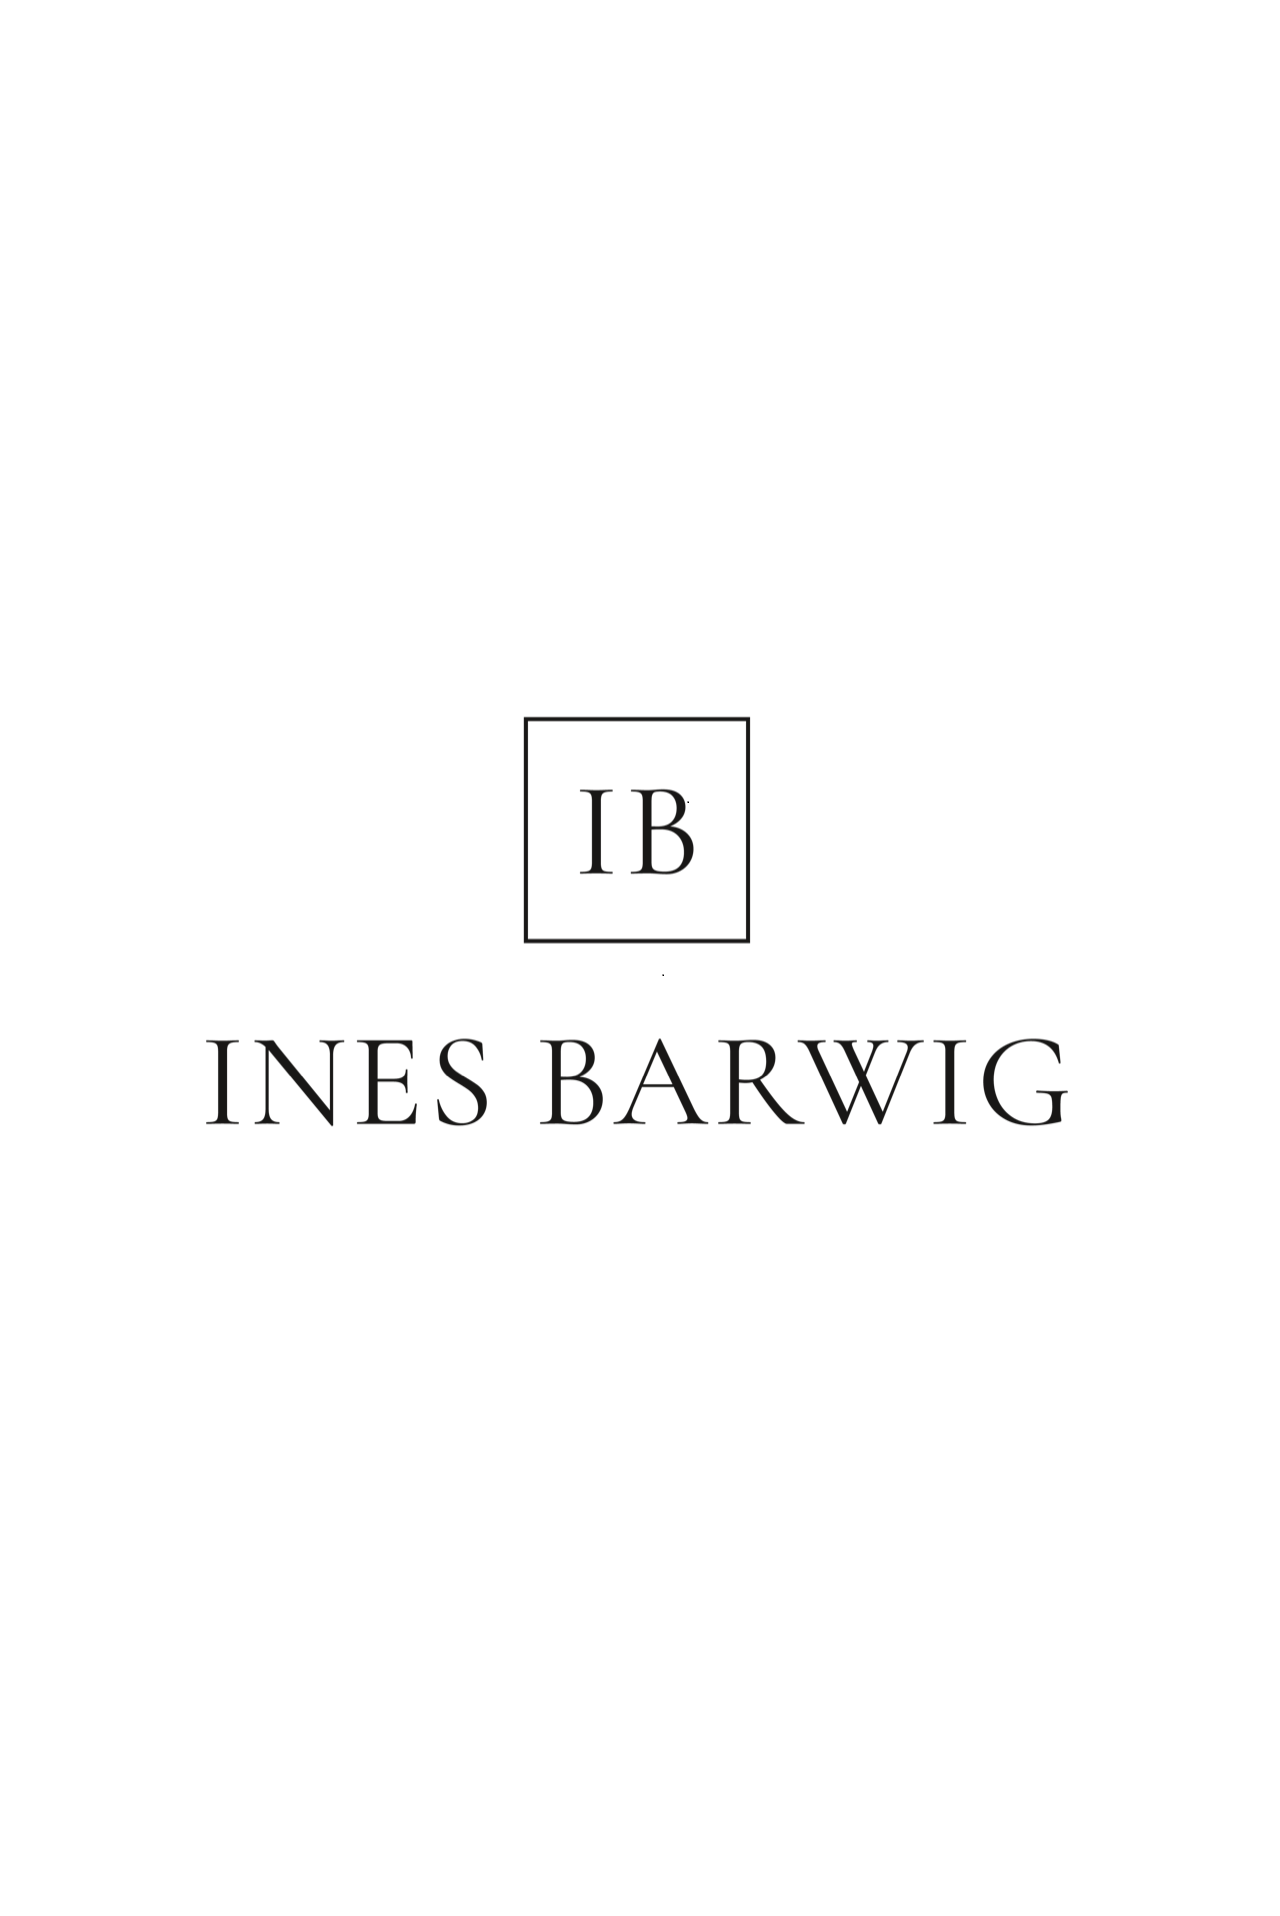 Logo IB 2018 komplett schwarz